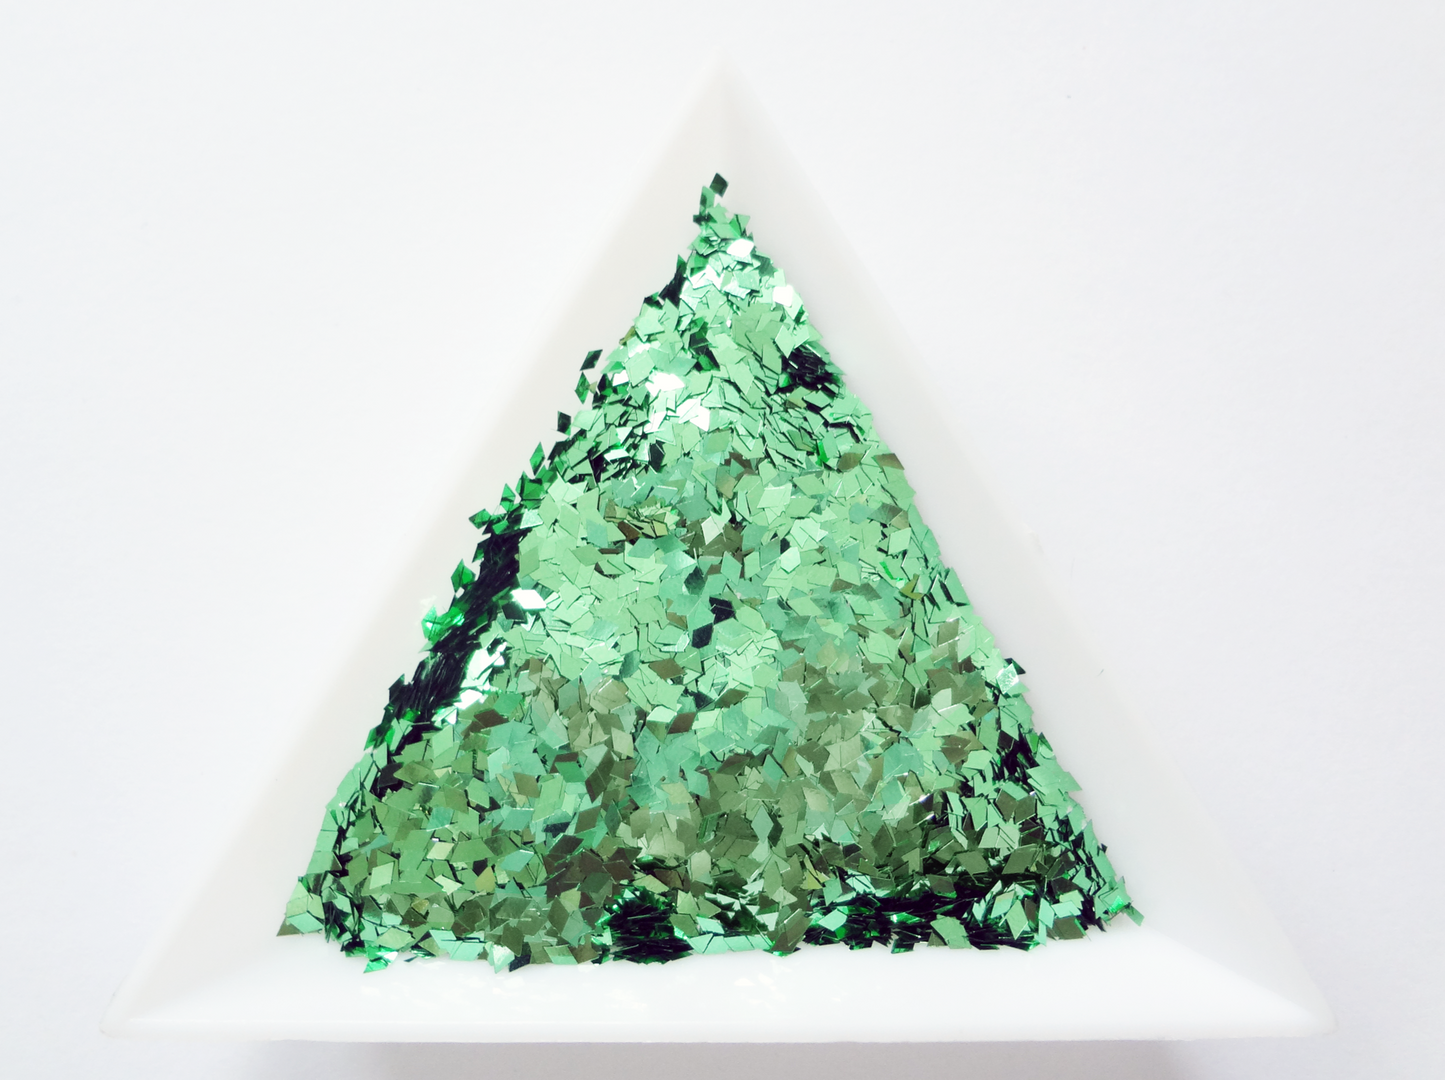 Celadon Green Diamond Shape Glitter, 3x1.5mm, Solvent Resistant Glitter